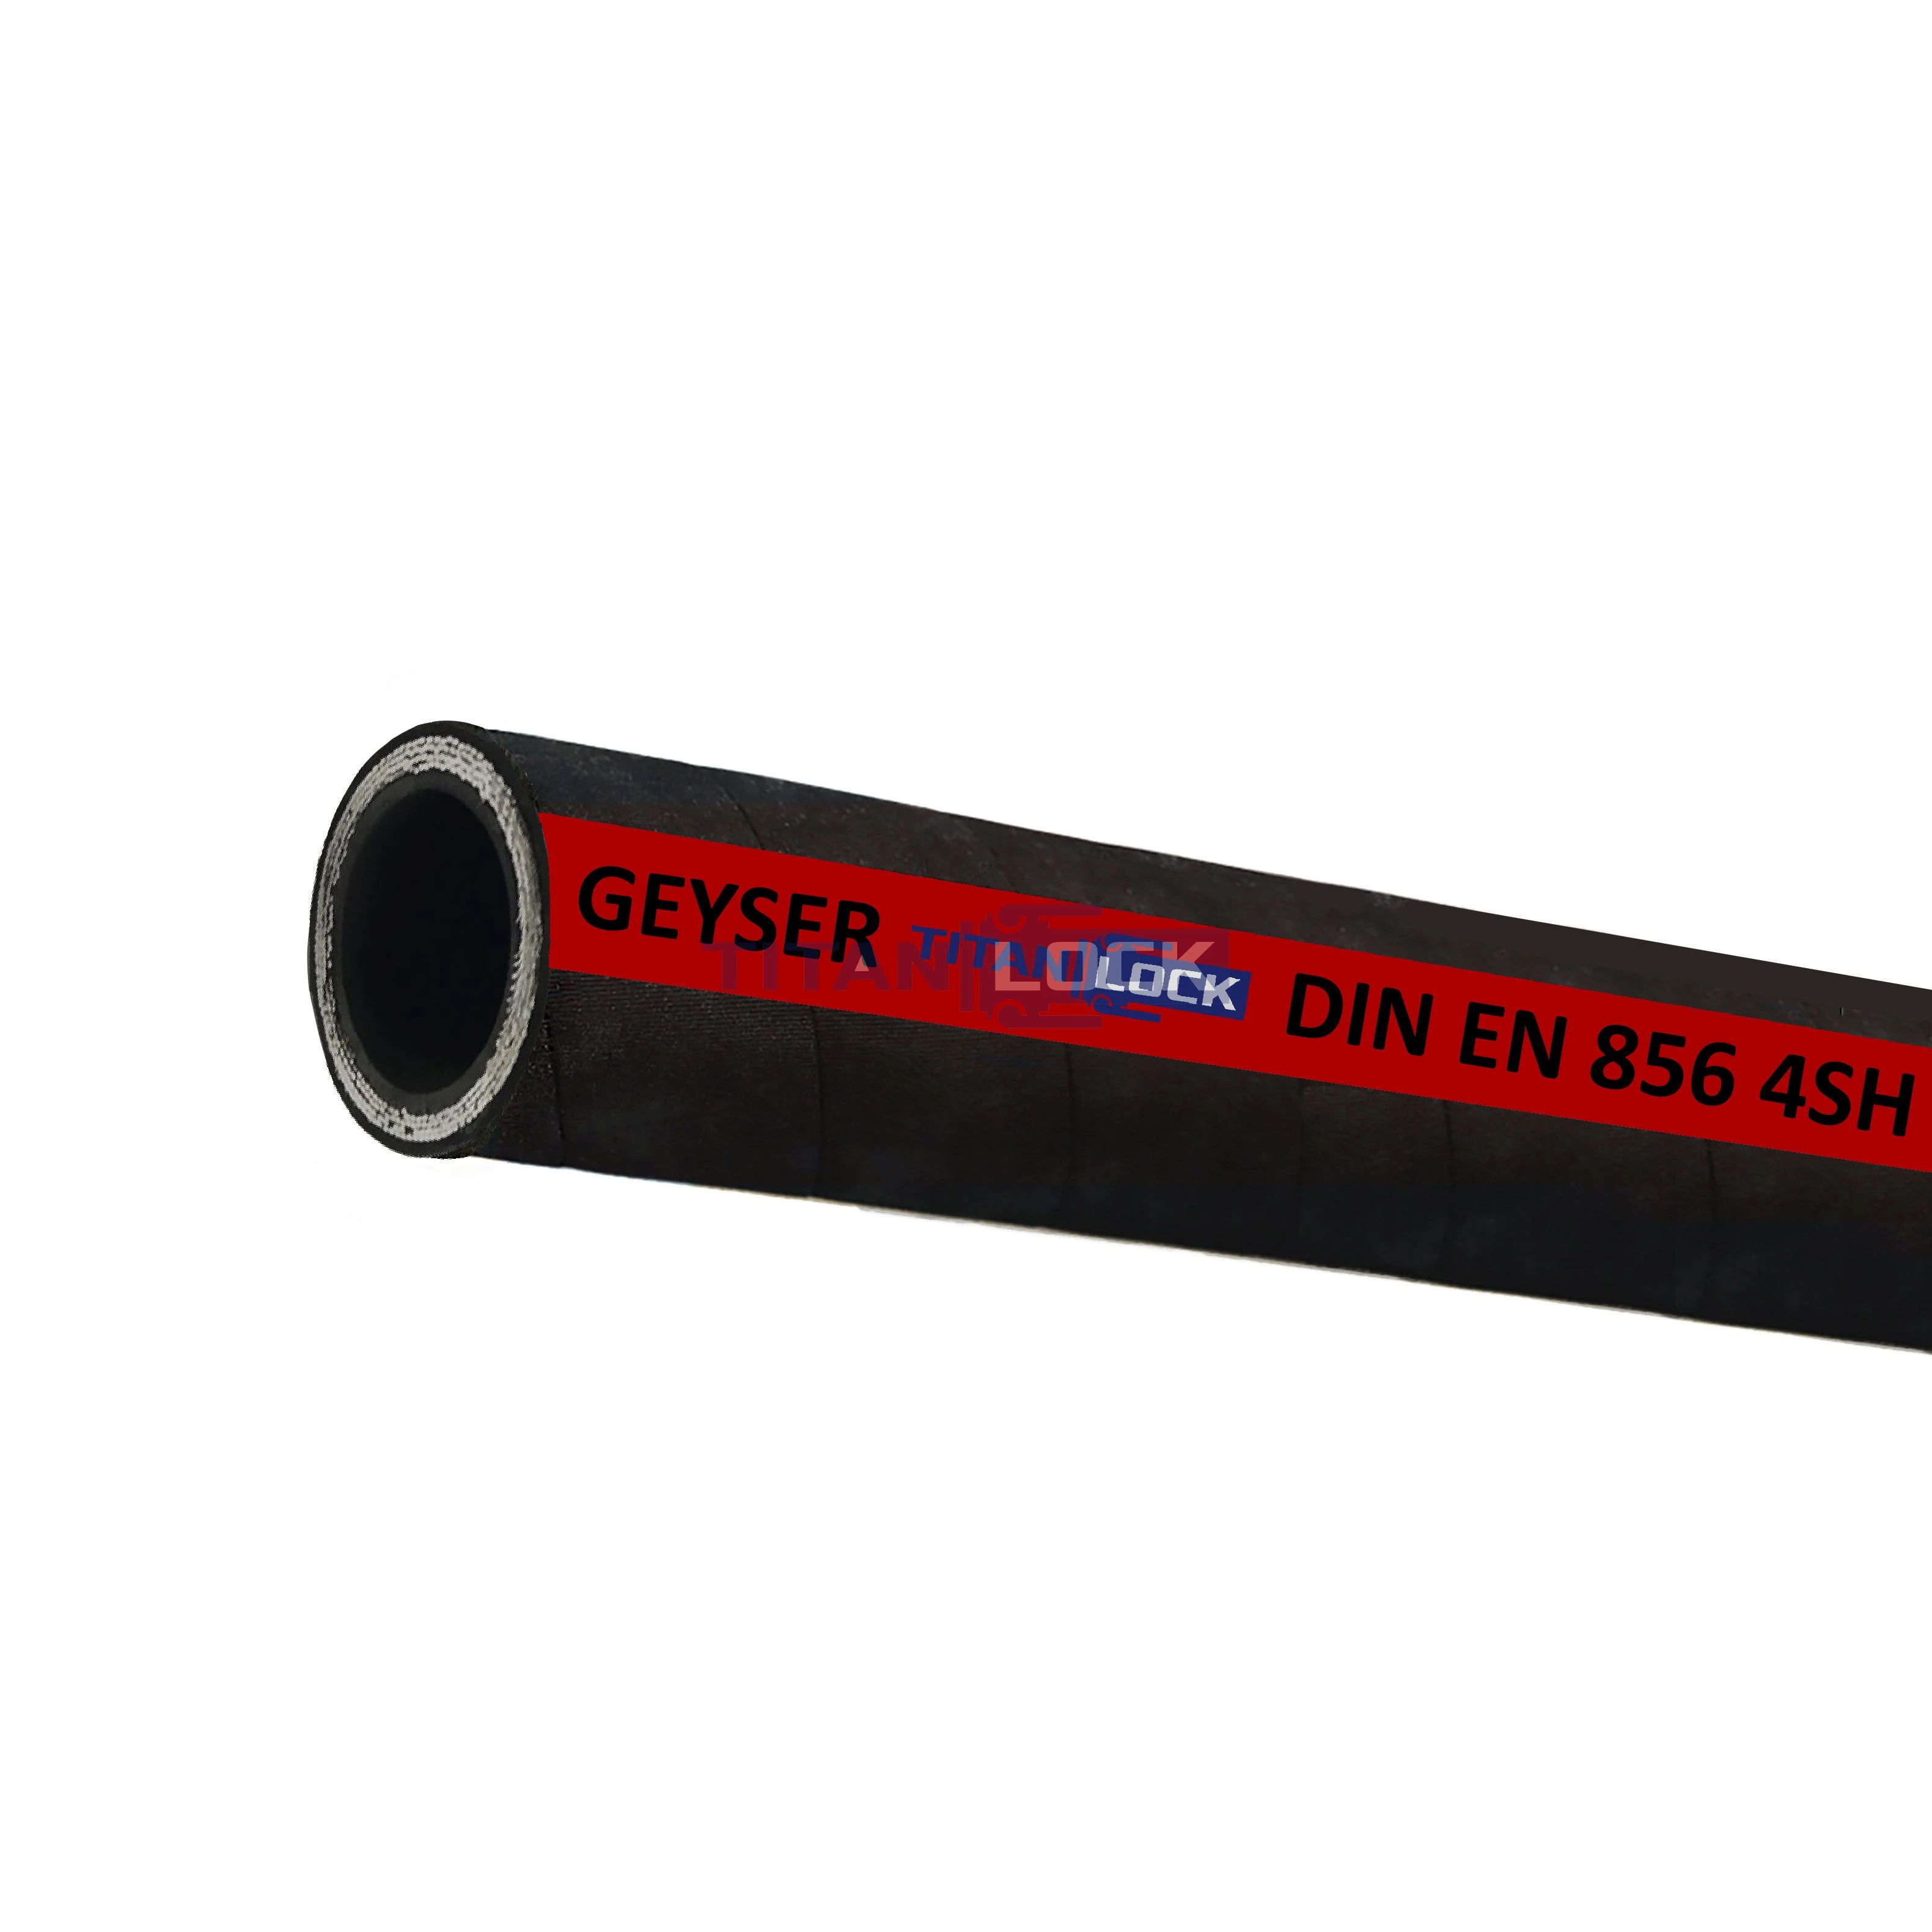 4Рукав высокого давления GEYSER 4SH EN856, внутр.диам. 51мм, TLGY050-4SH TITAN LOCK